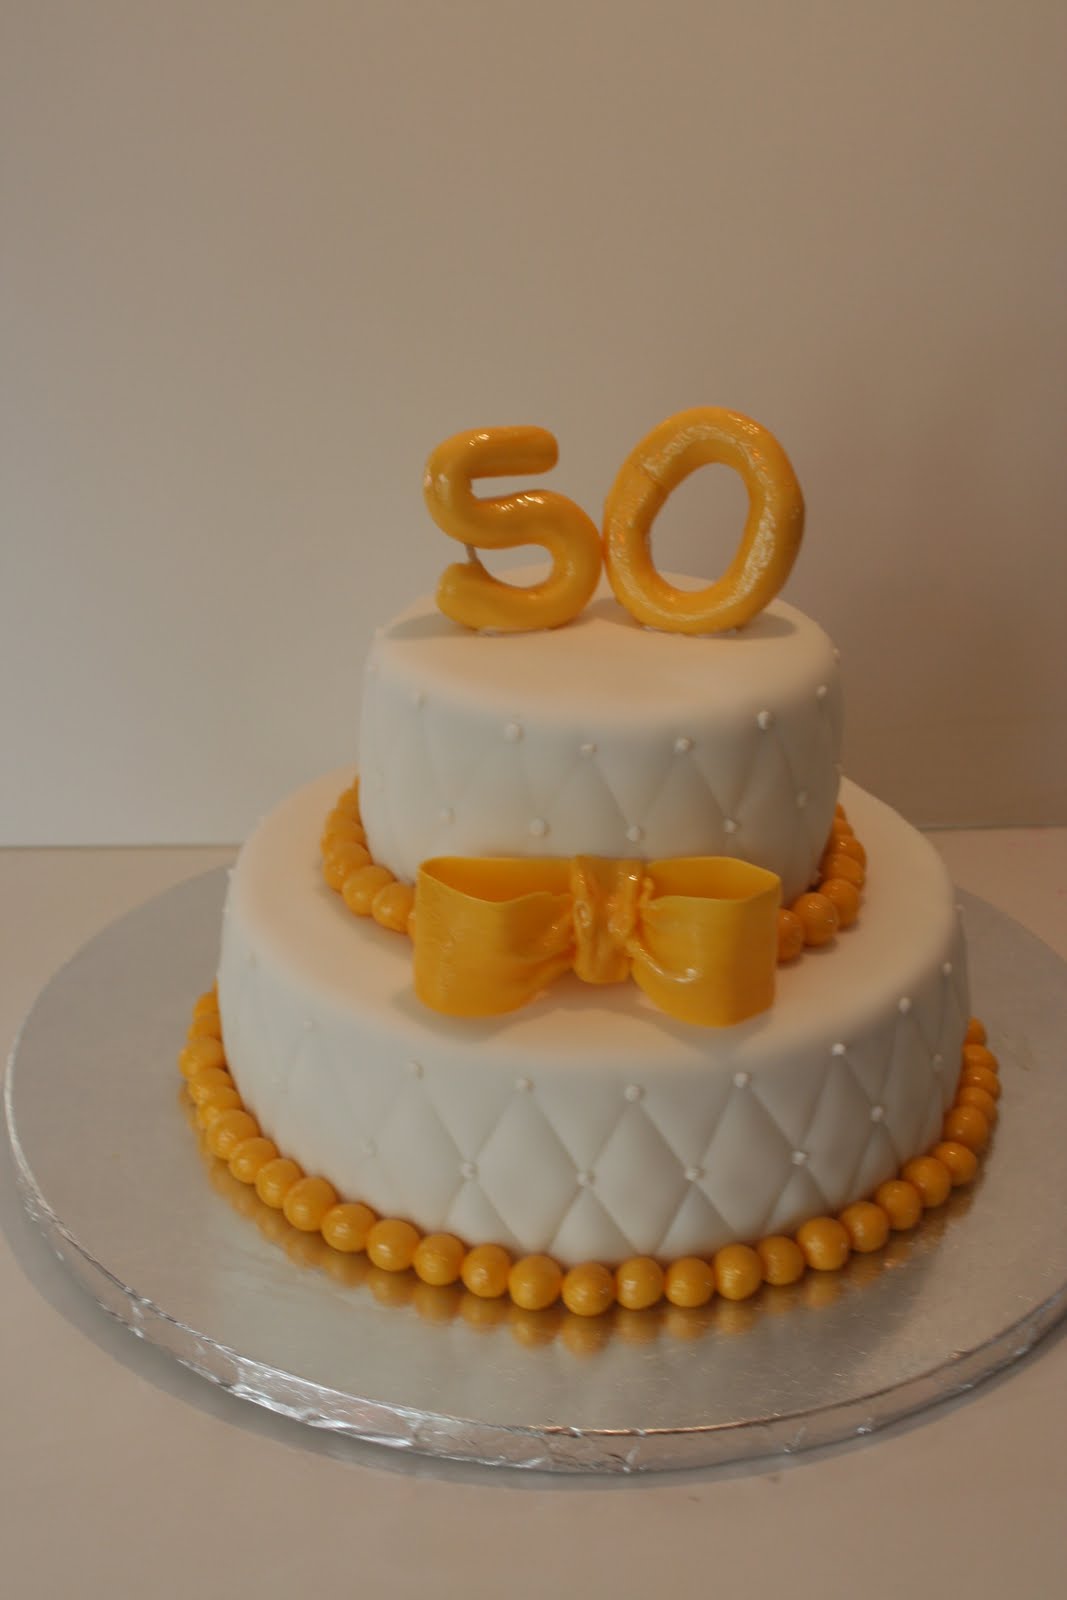 50th anniversary cakes